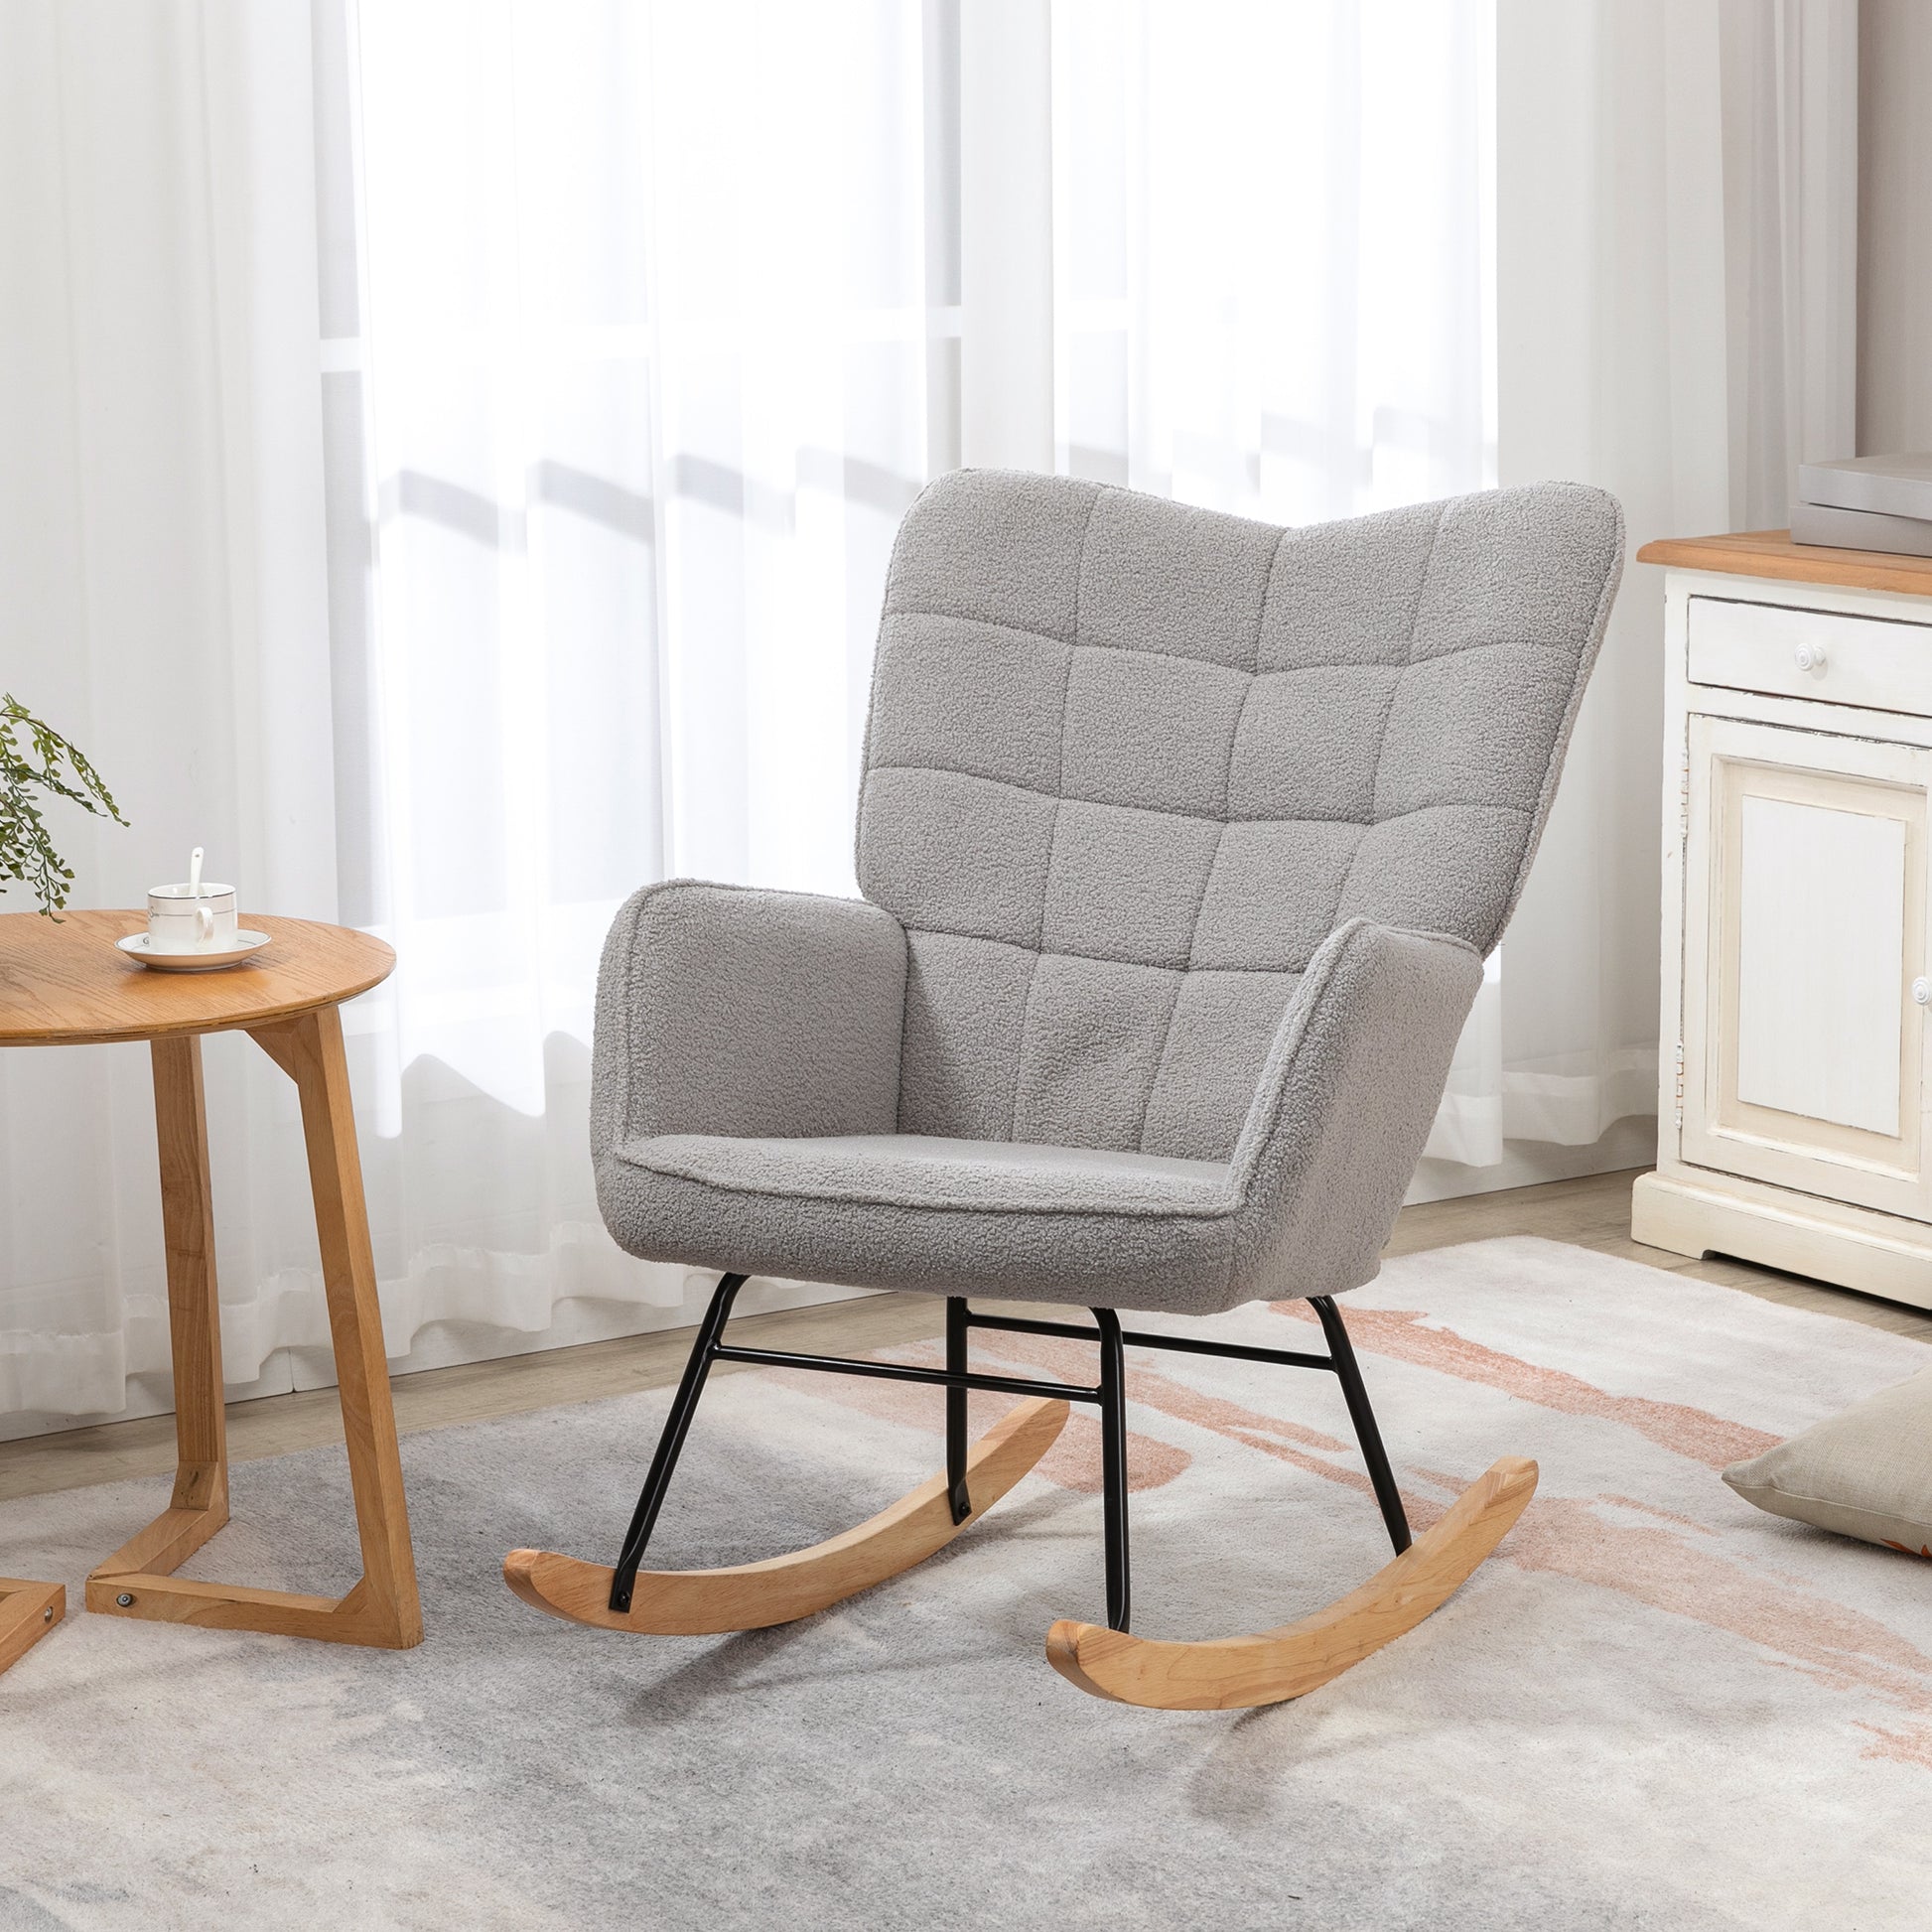 Muebles de Salón muebles de madera cómoda silla mecedora - China Muebles de  hogar, muebles modernos